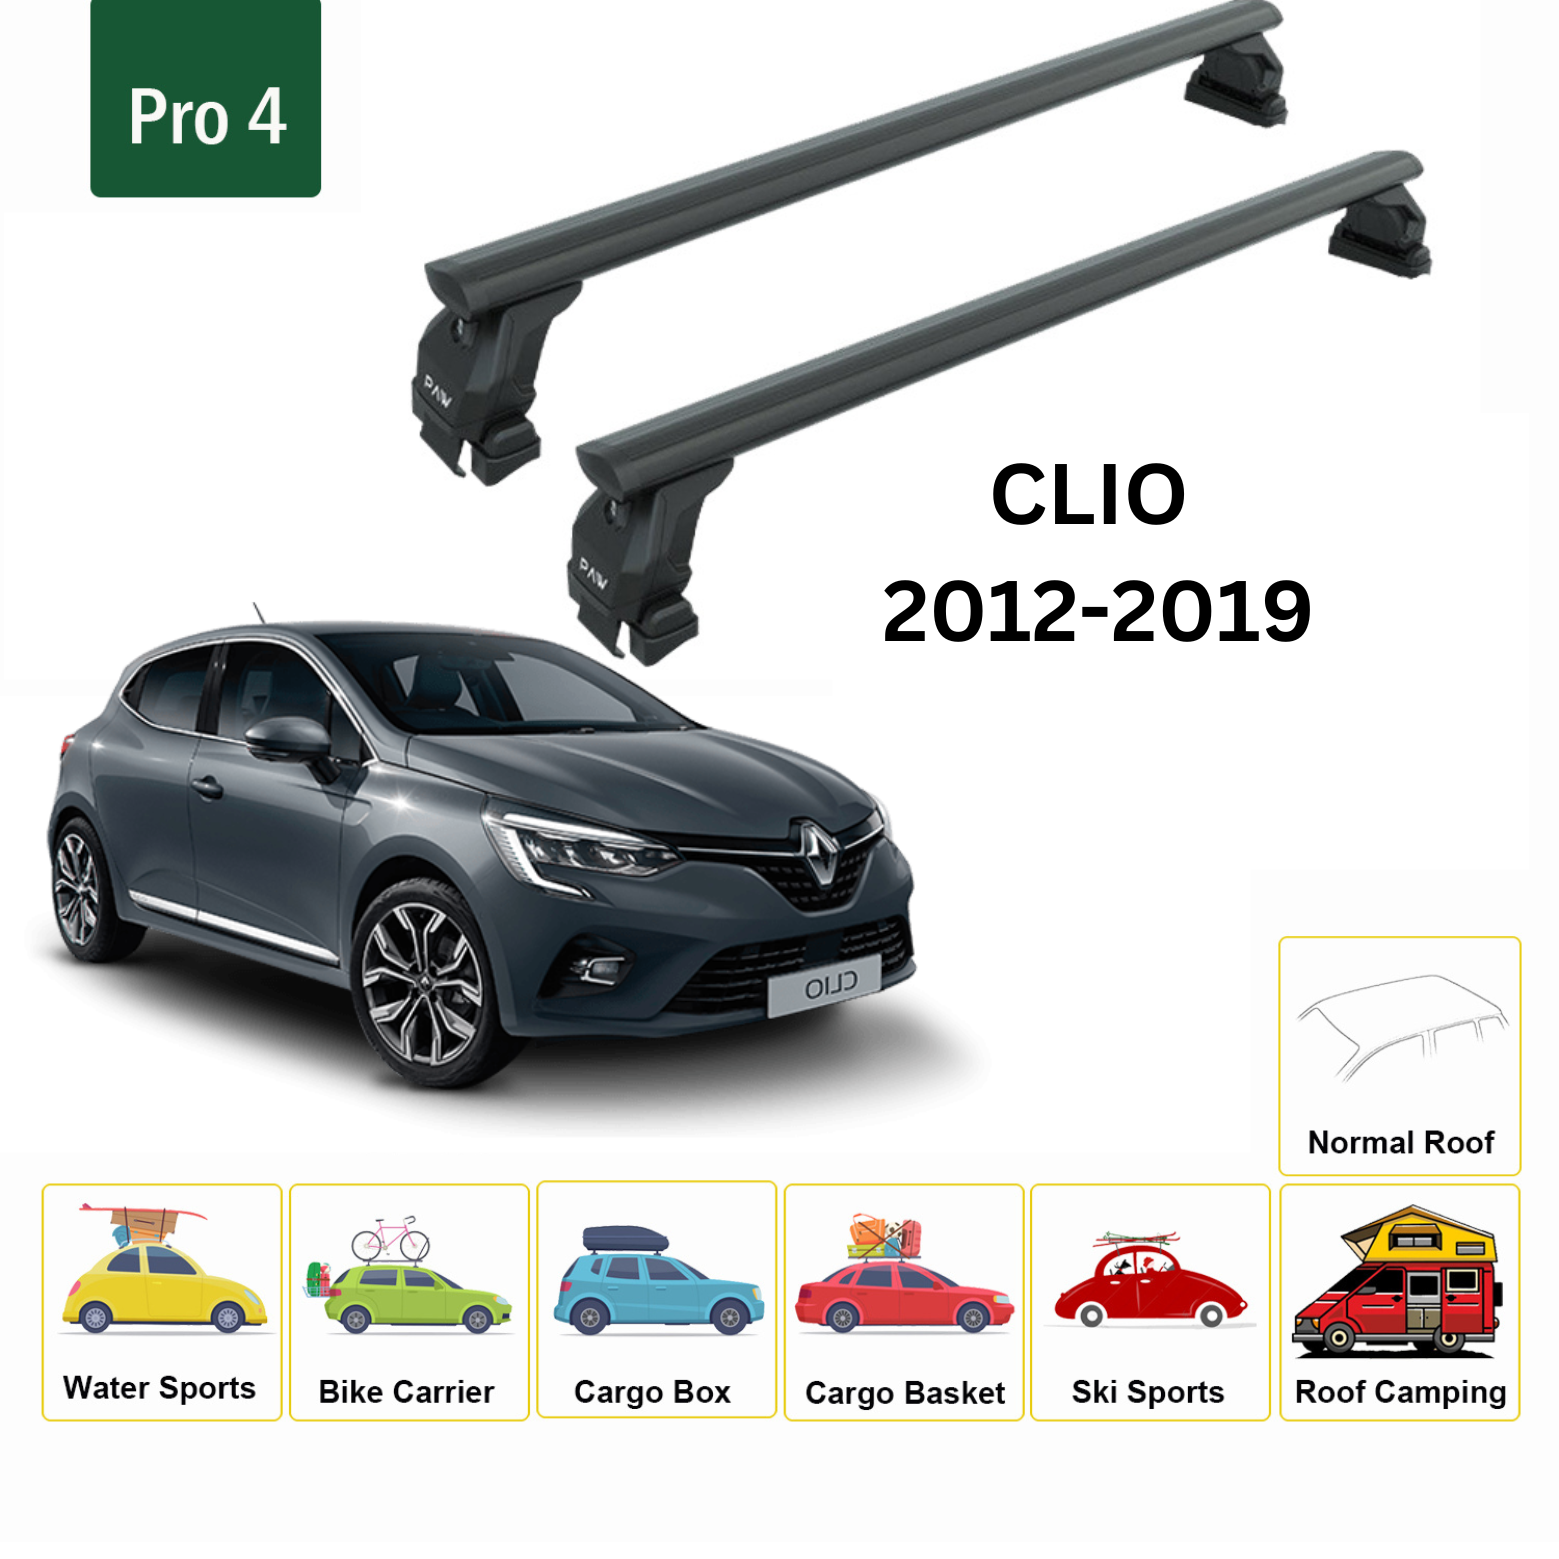 For Renault Clio 2012-2019 Roof Rack System, Aluminium Cross Bar, Metal Bracket, Normal Roof, Black - 0